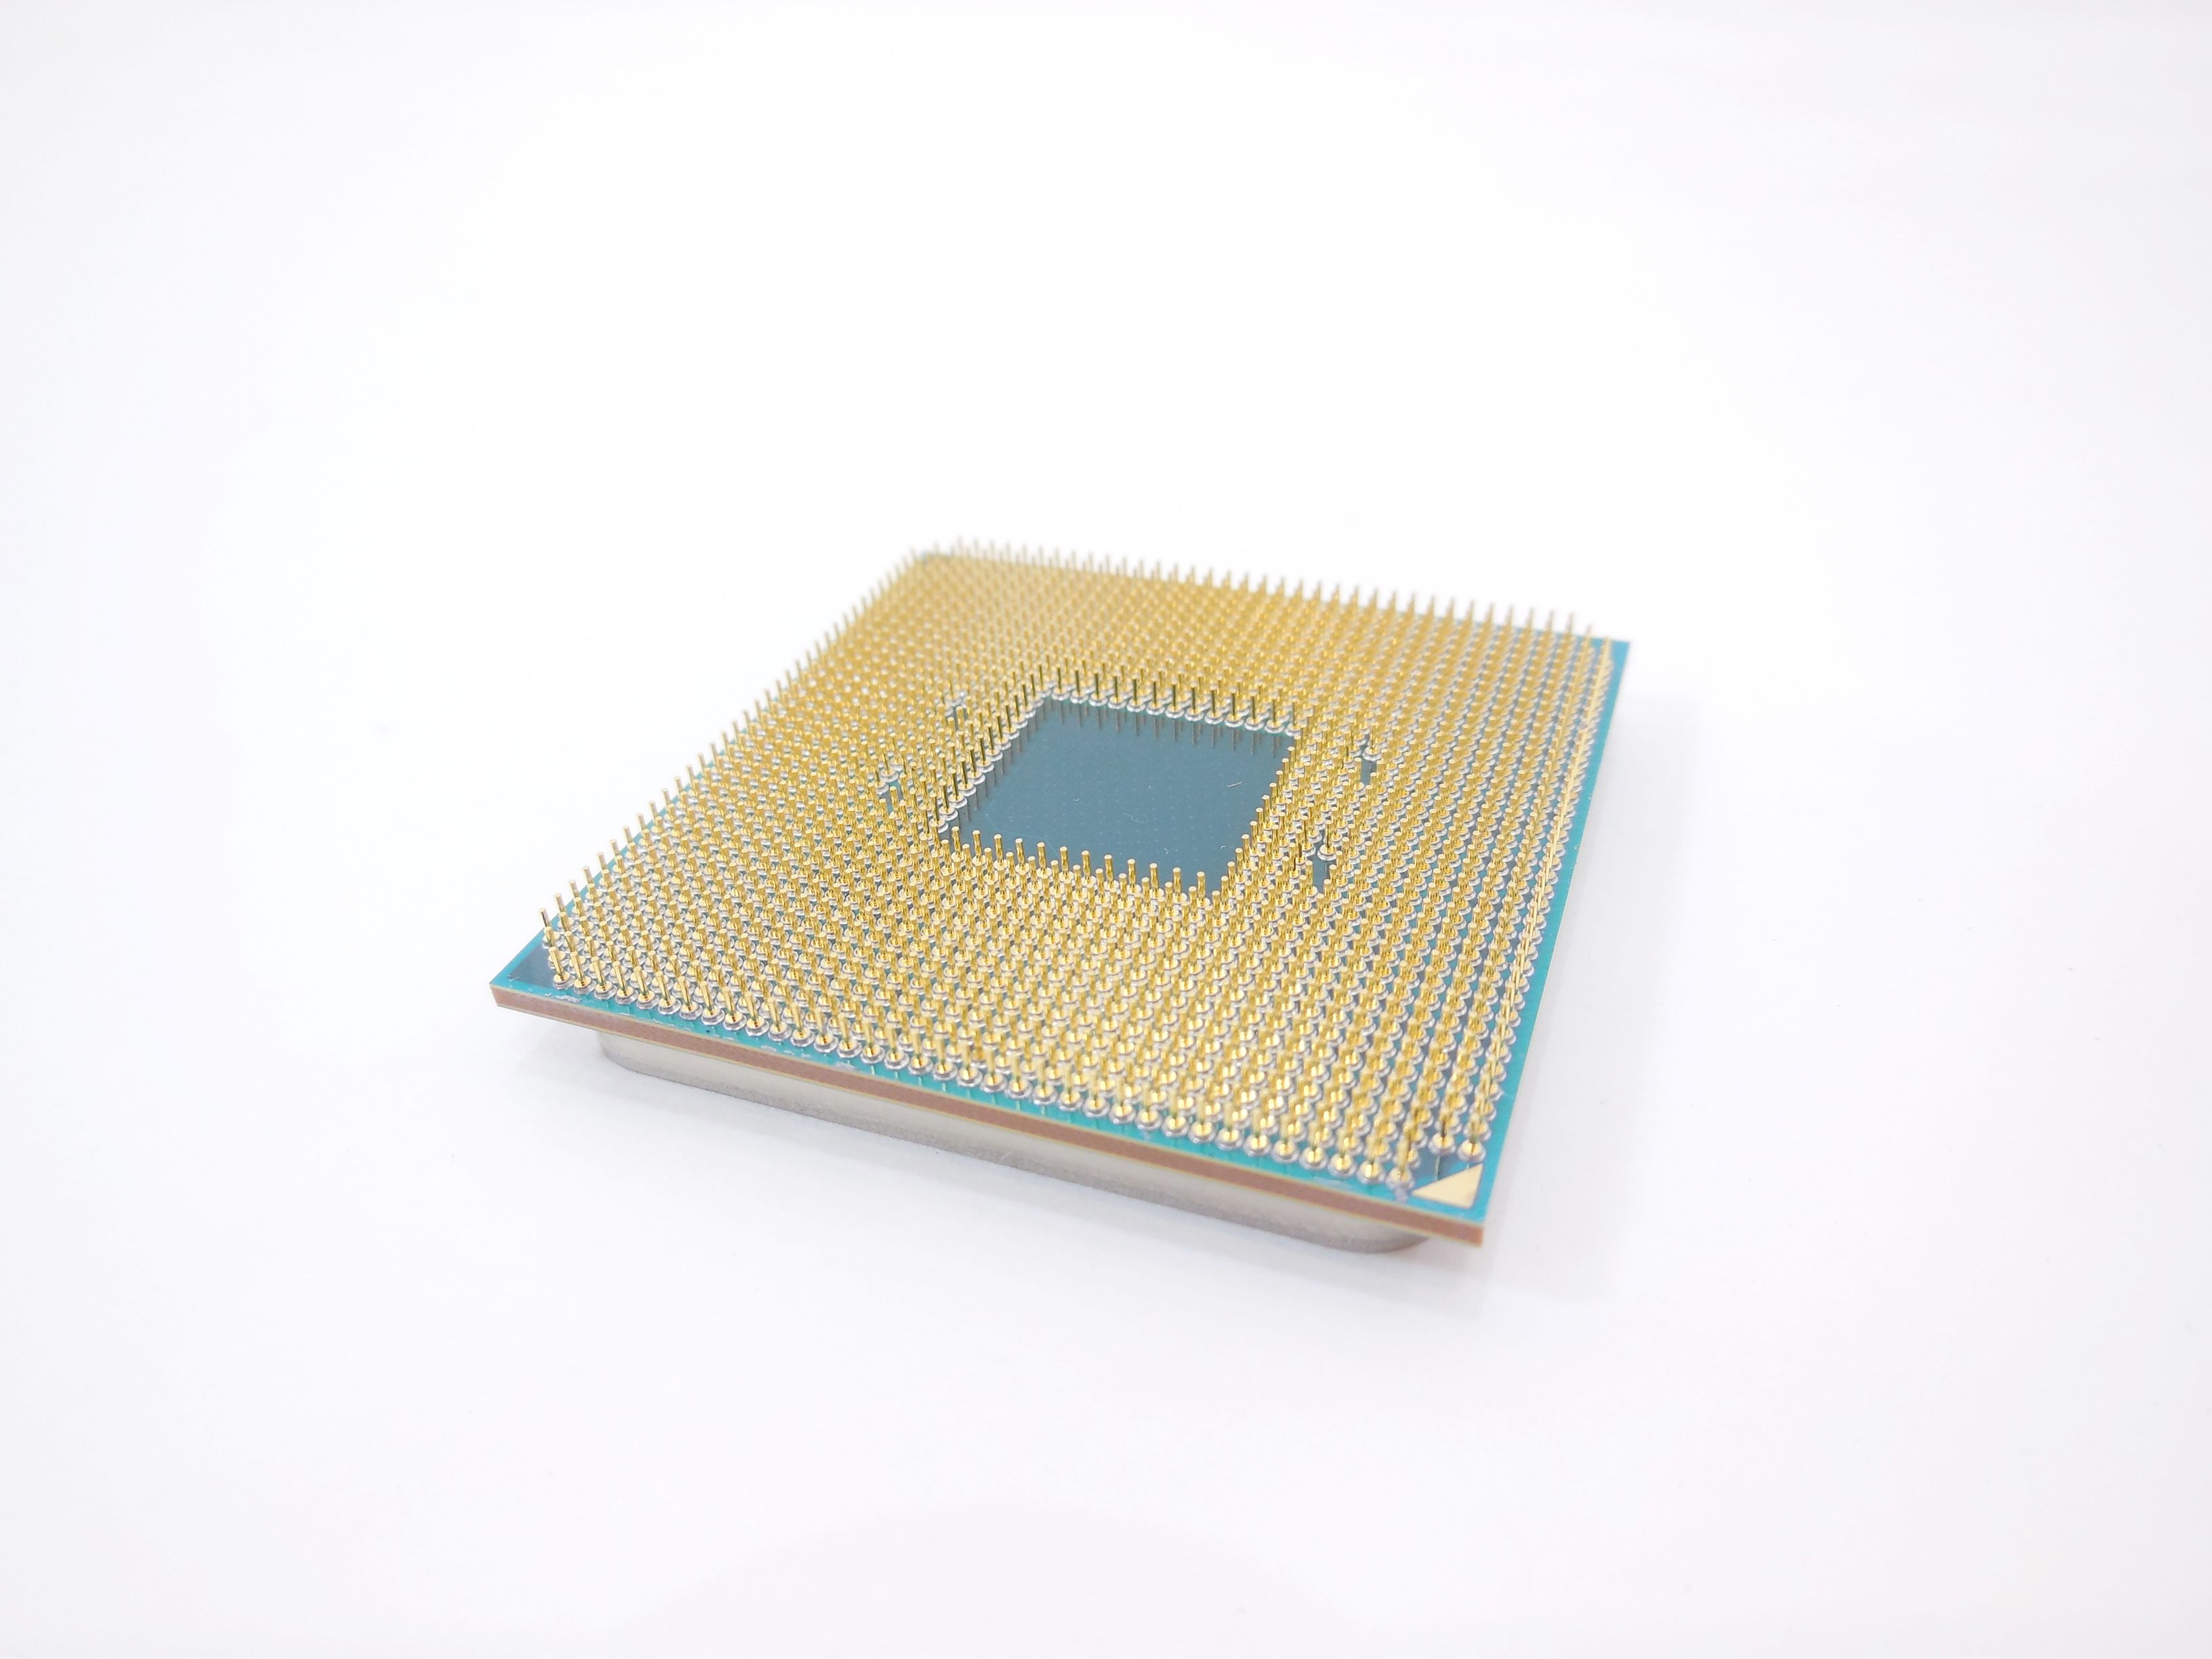 Процессор amd ryzen сокет. Процессор Socket am4 AMD Ryzen 7 1700. AMD Ryzen 5 2600. AMD am4 Socket. AMD сокет am4.